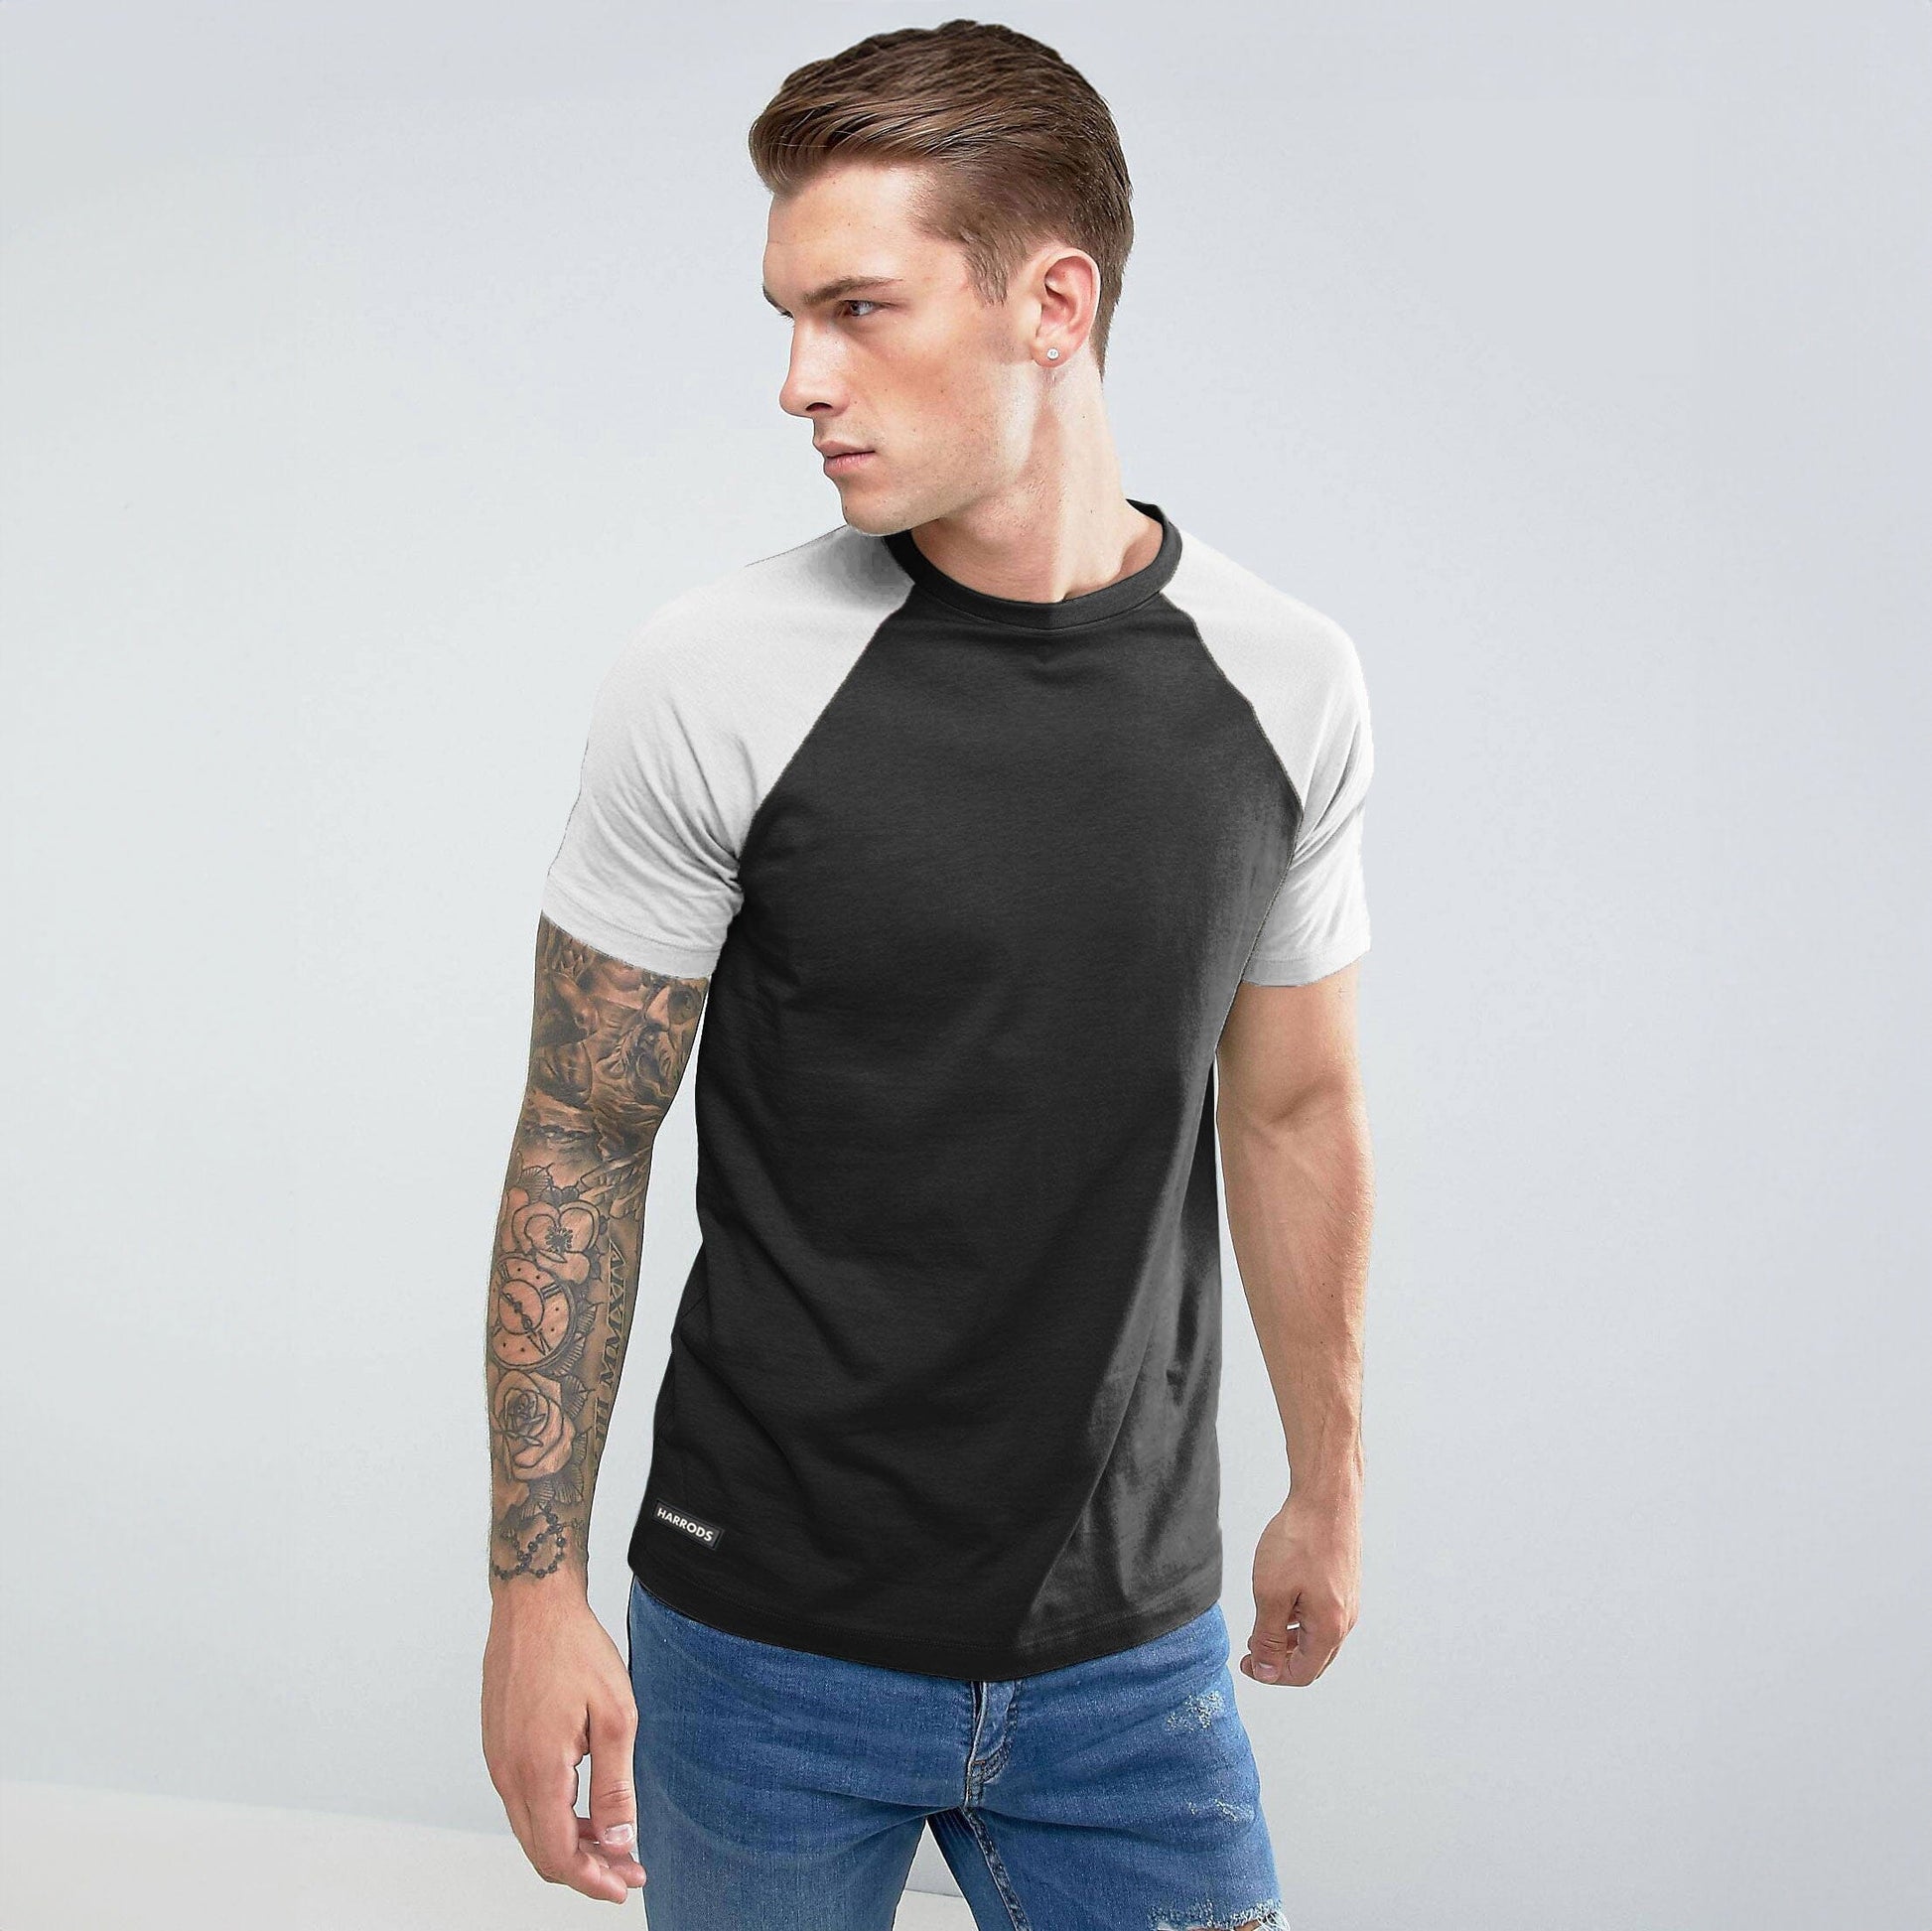 Harrods Men's Contrast Sleeve Style Crew Neck Tee Shirt Men's Tee Shirt IBT Black & White S 